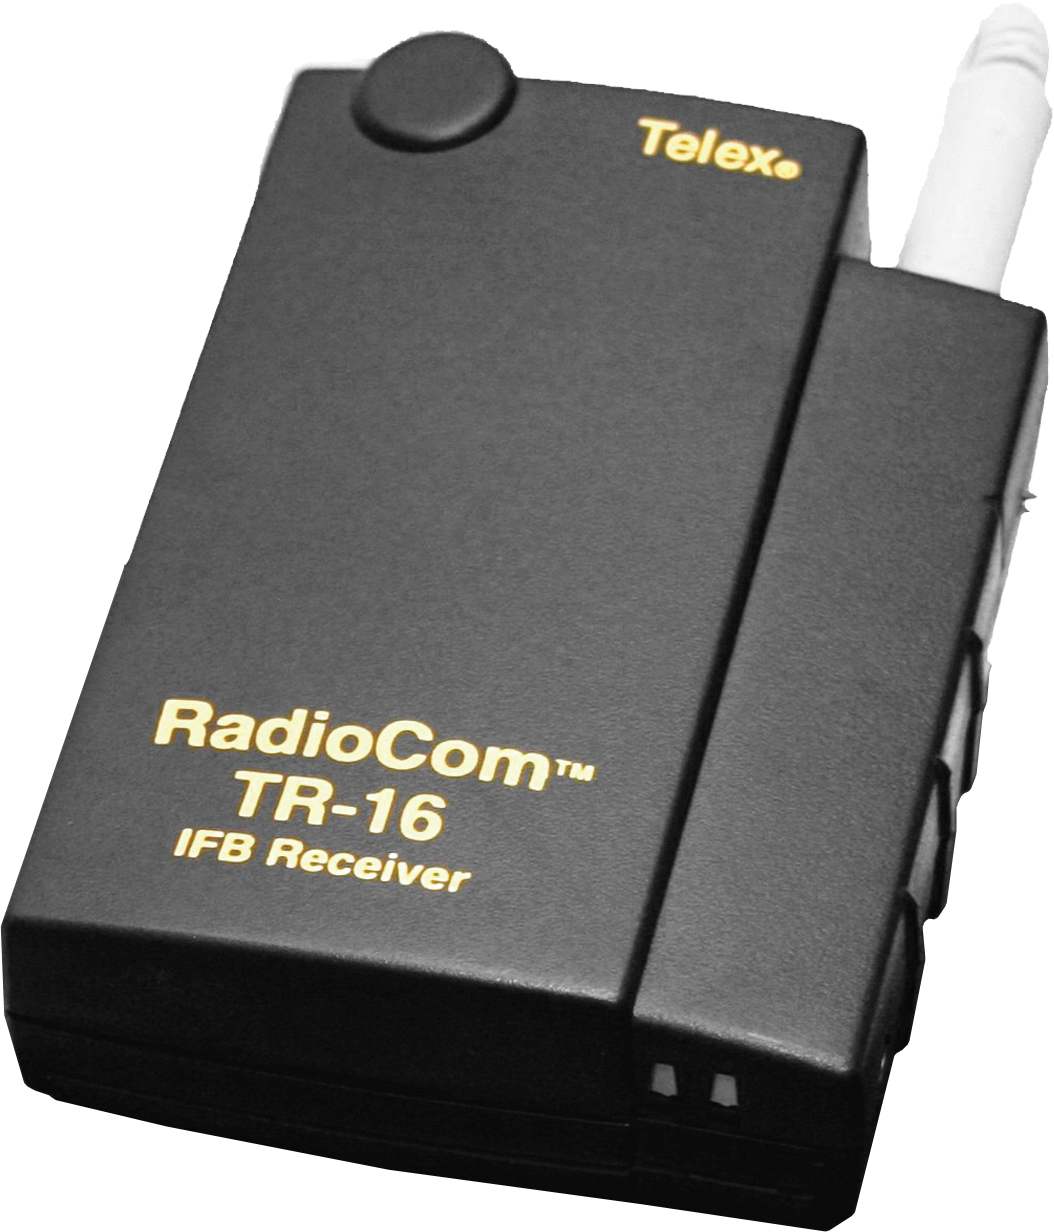 Details about   Telex RTS RadioCom TR-16 IFB Wireless Receiver